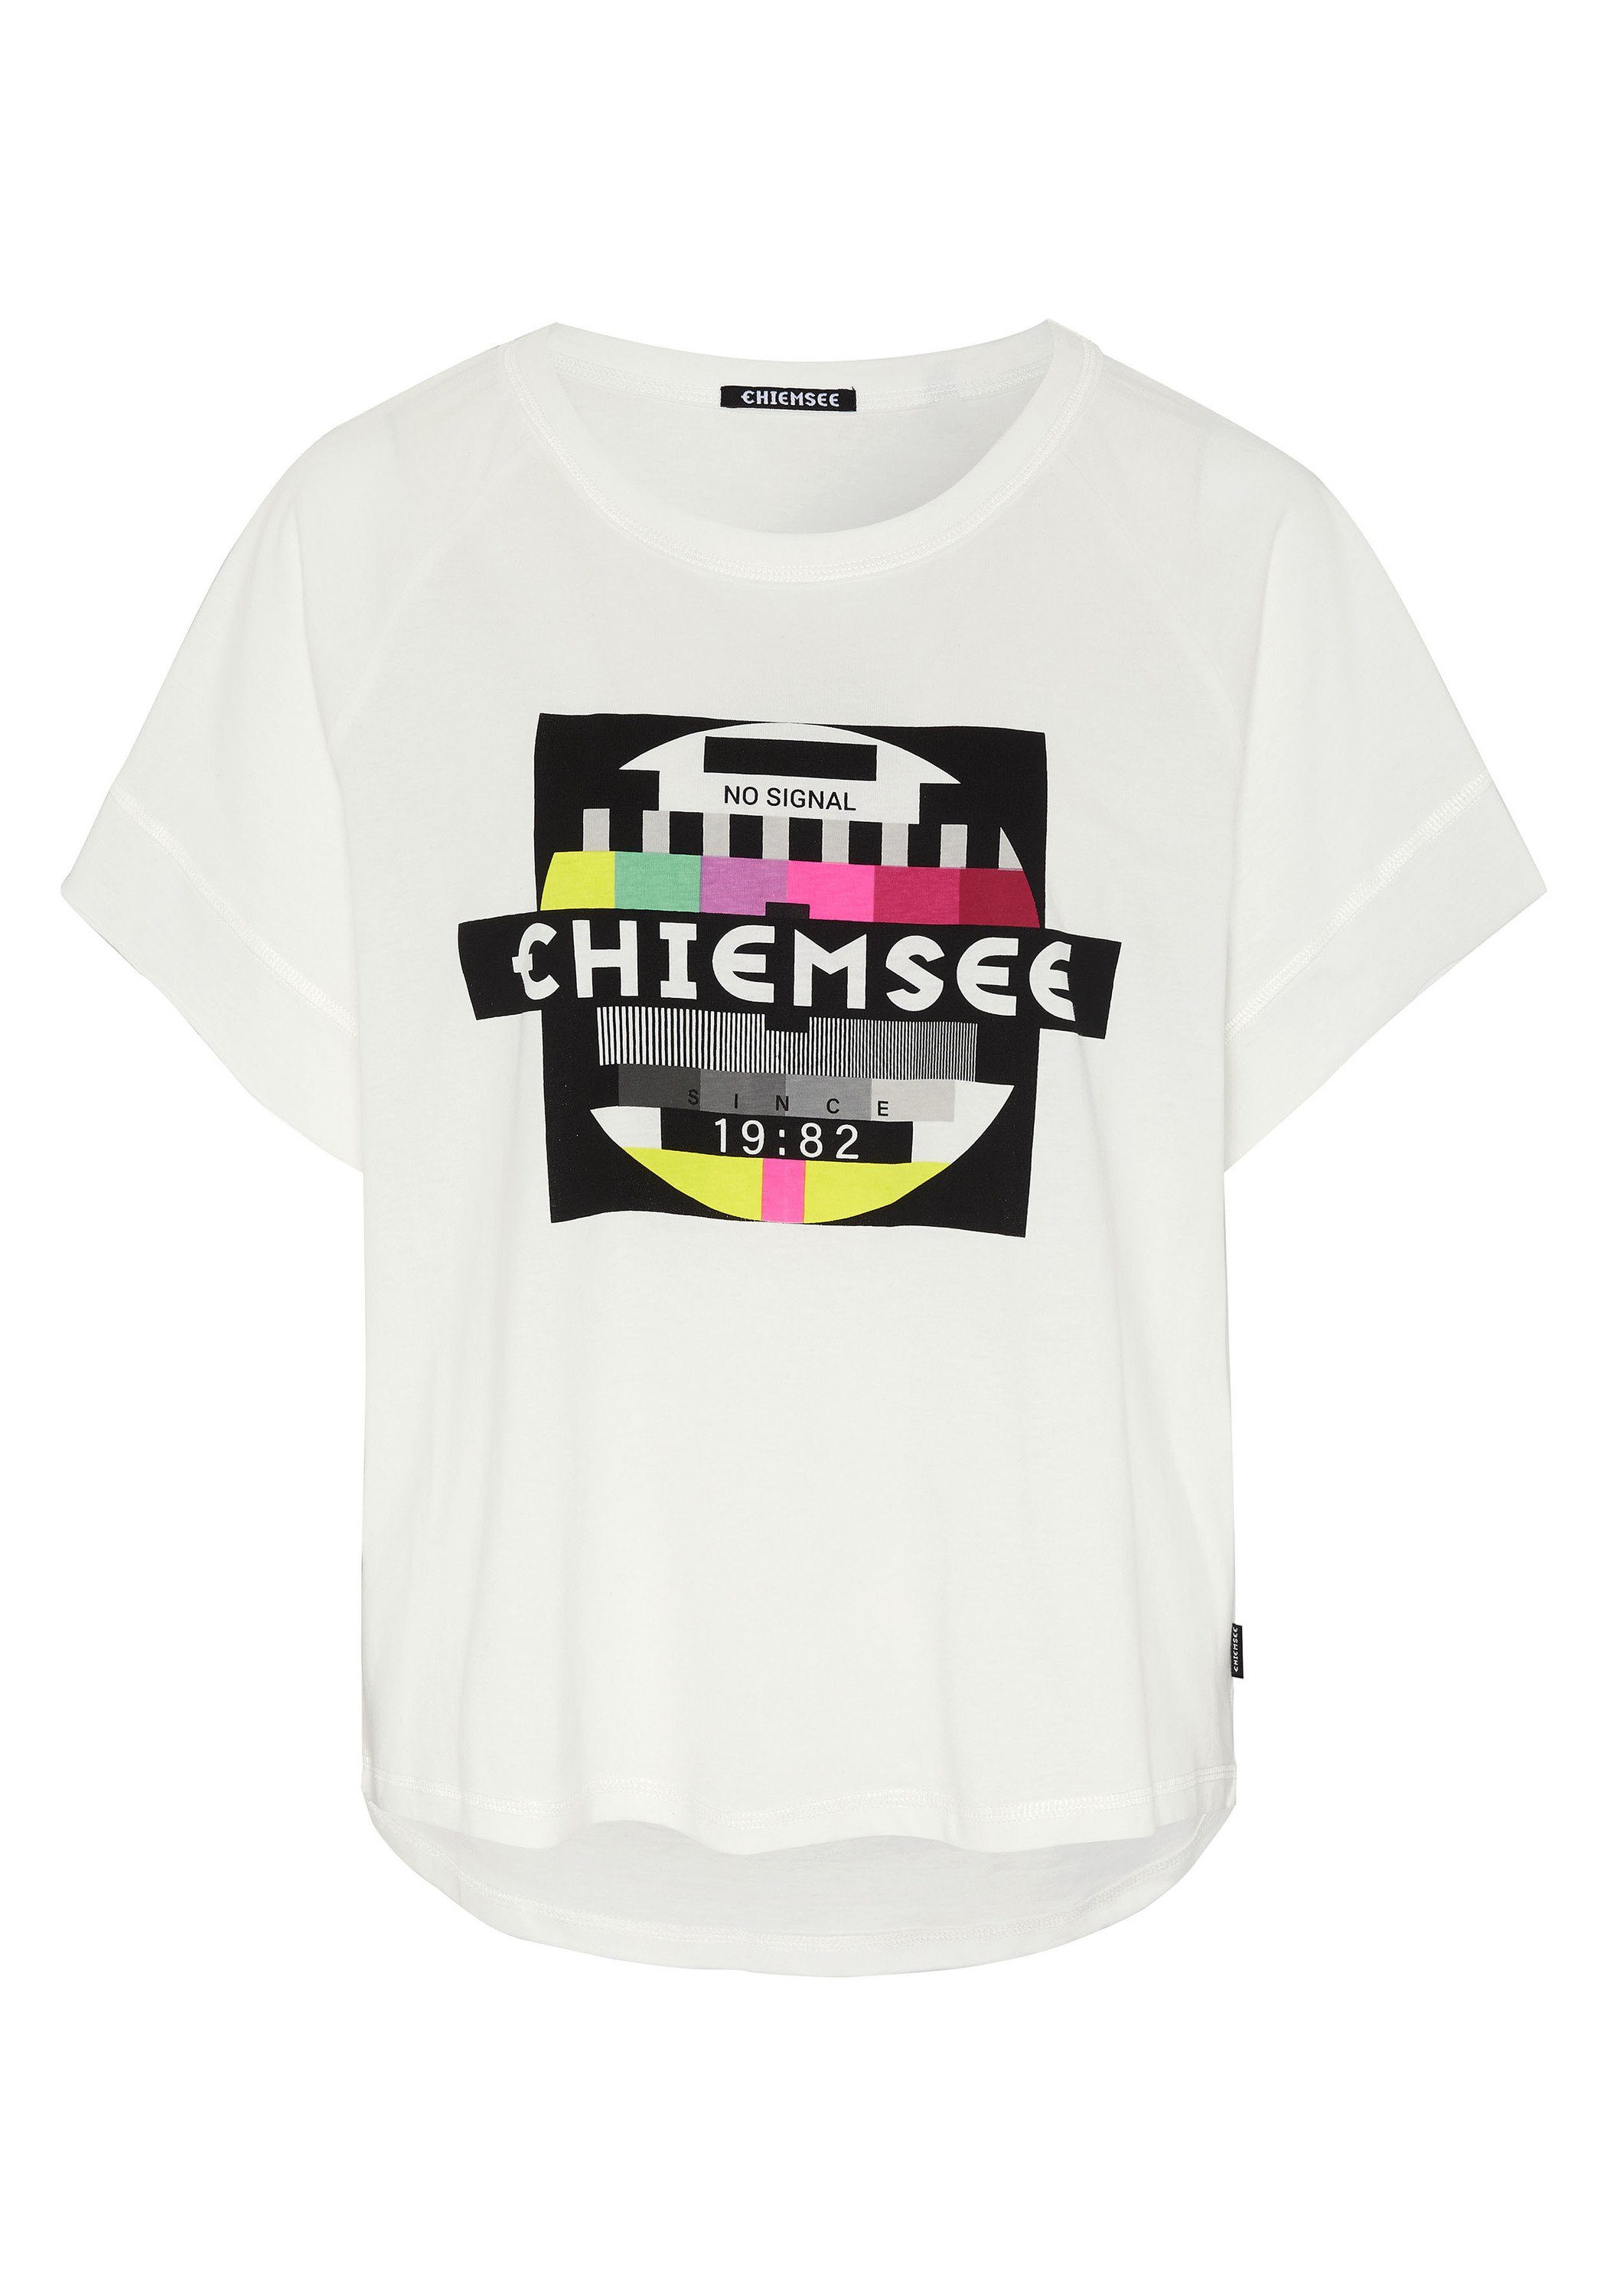 Kastiges Print-Shirt T-Shirt NO-SIGNAL-Print mit Chiemsee 1